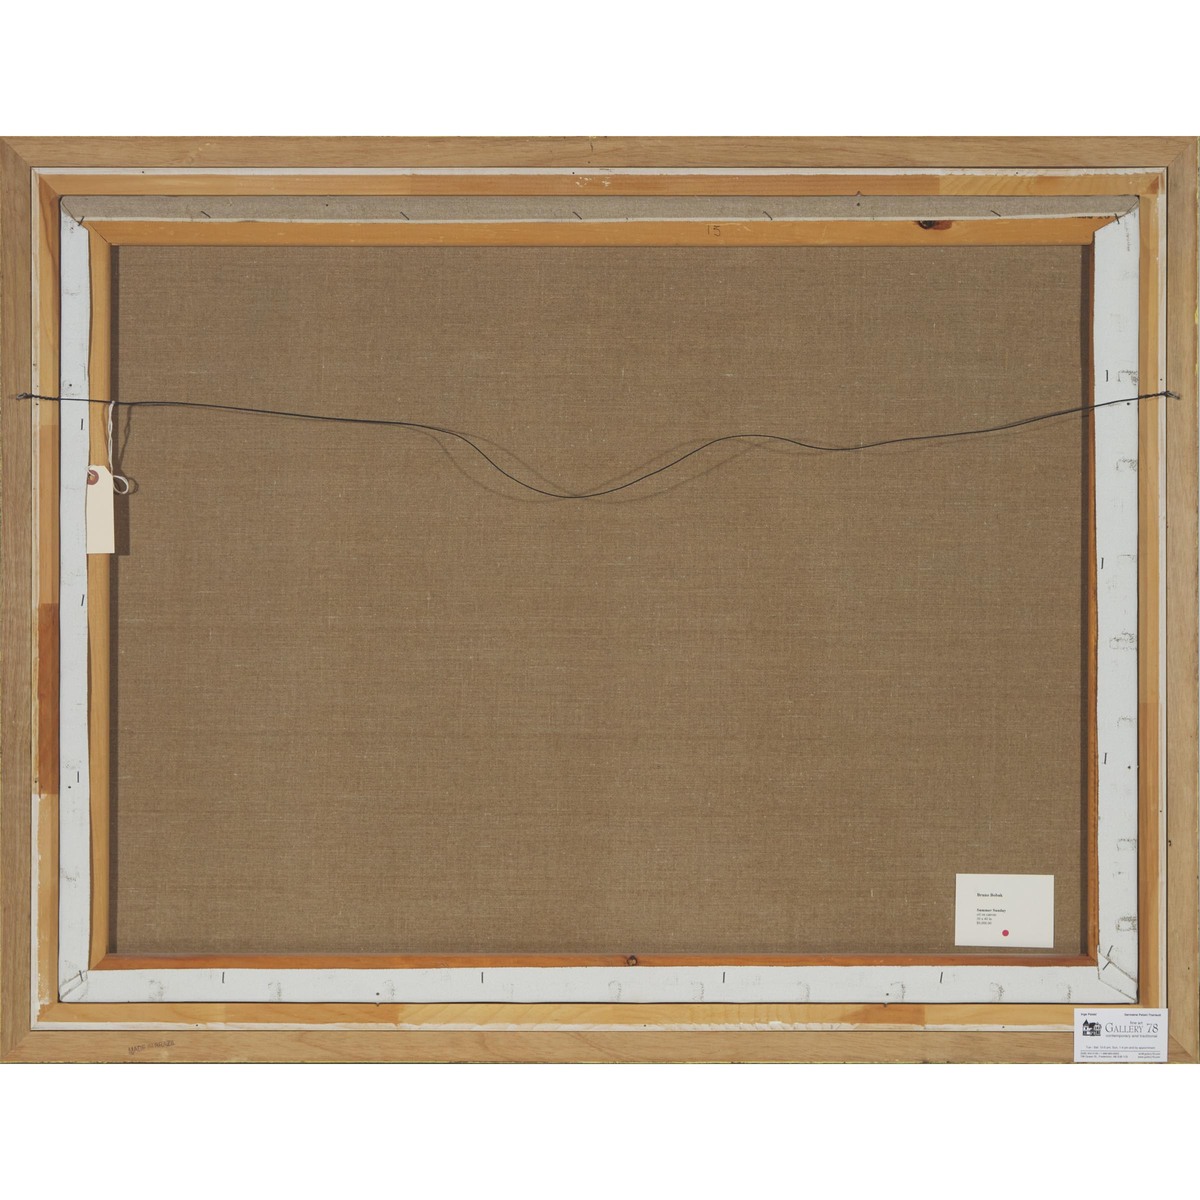 Bruno Joseph Bobak, RCA (1923-2012), SUMMER SUNDAY, 30 x 40 in — 76.2 x 101.6 cm - Image 4 of 5